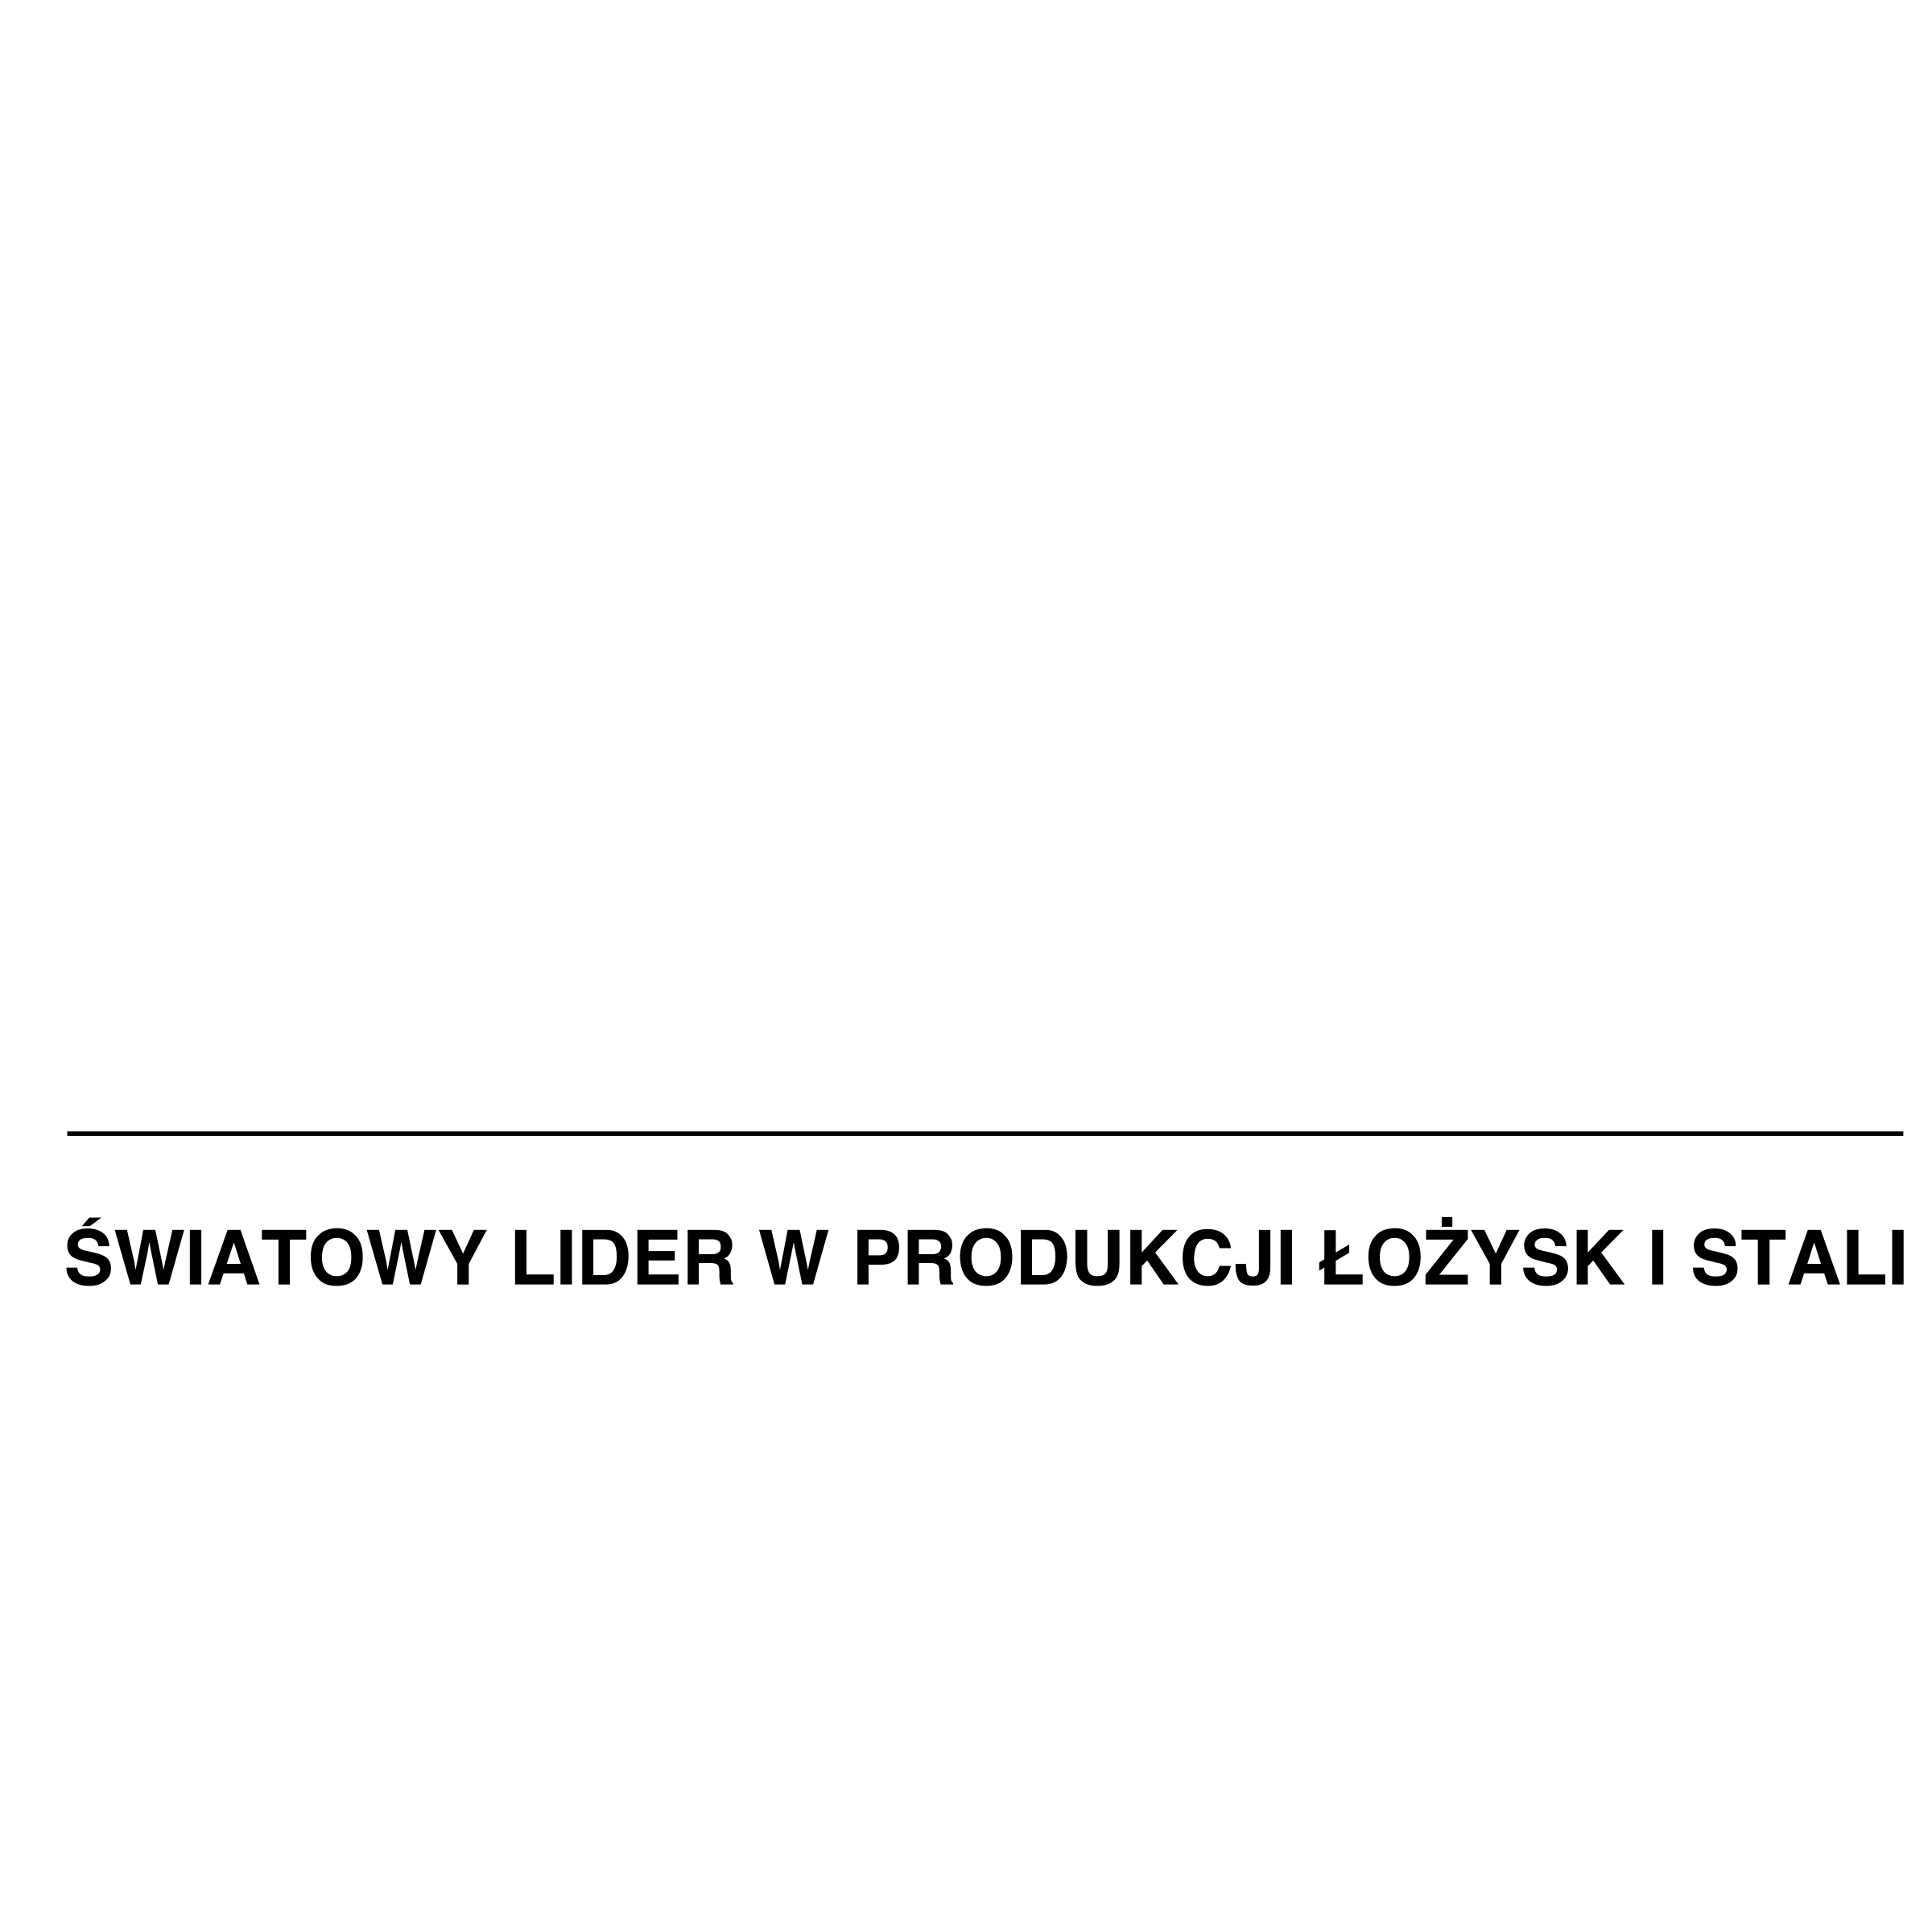 Timken Logo - Timken Logo PNG Transparent & SVG Vector - Freebie Supply